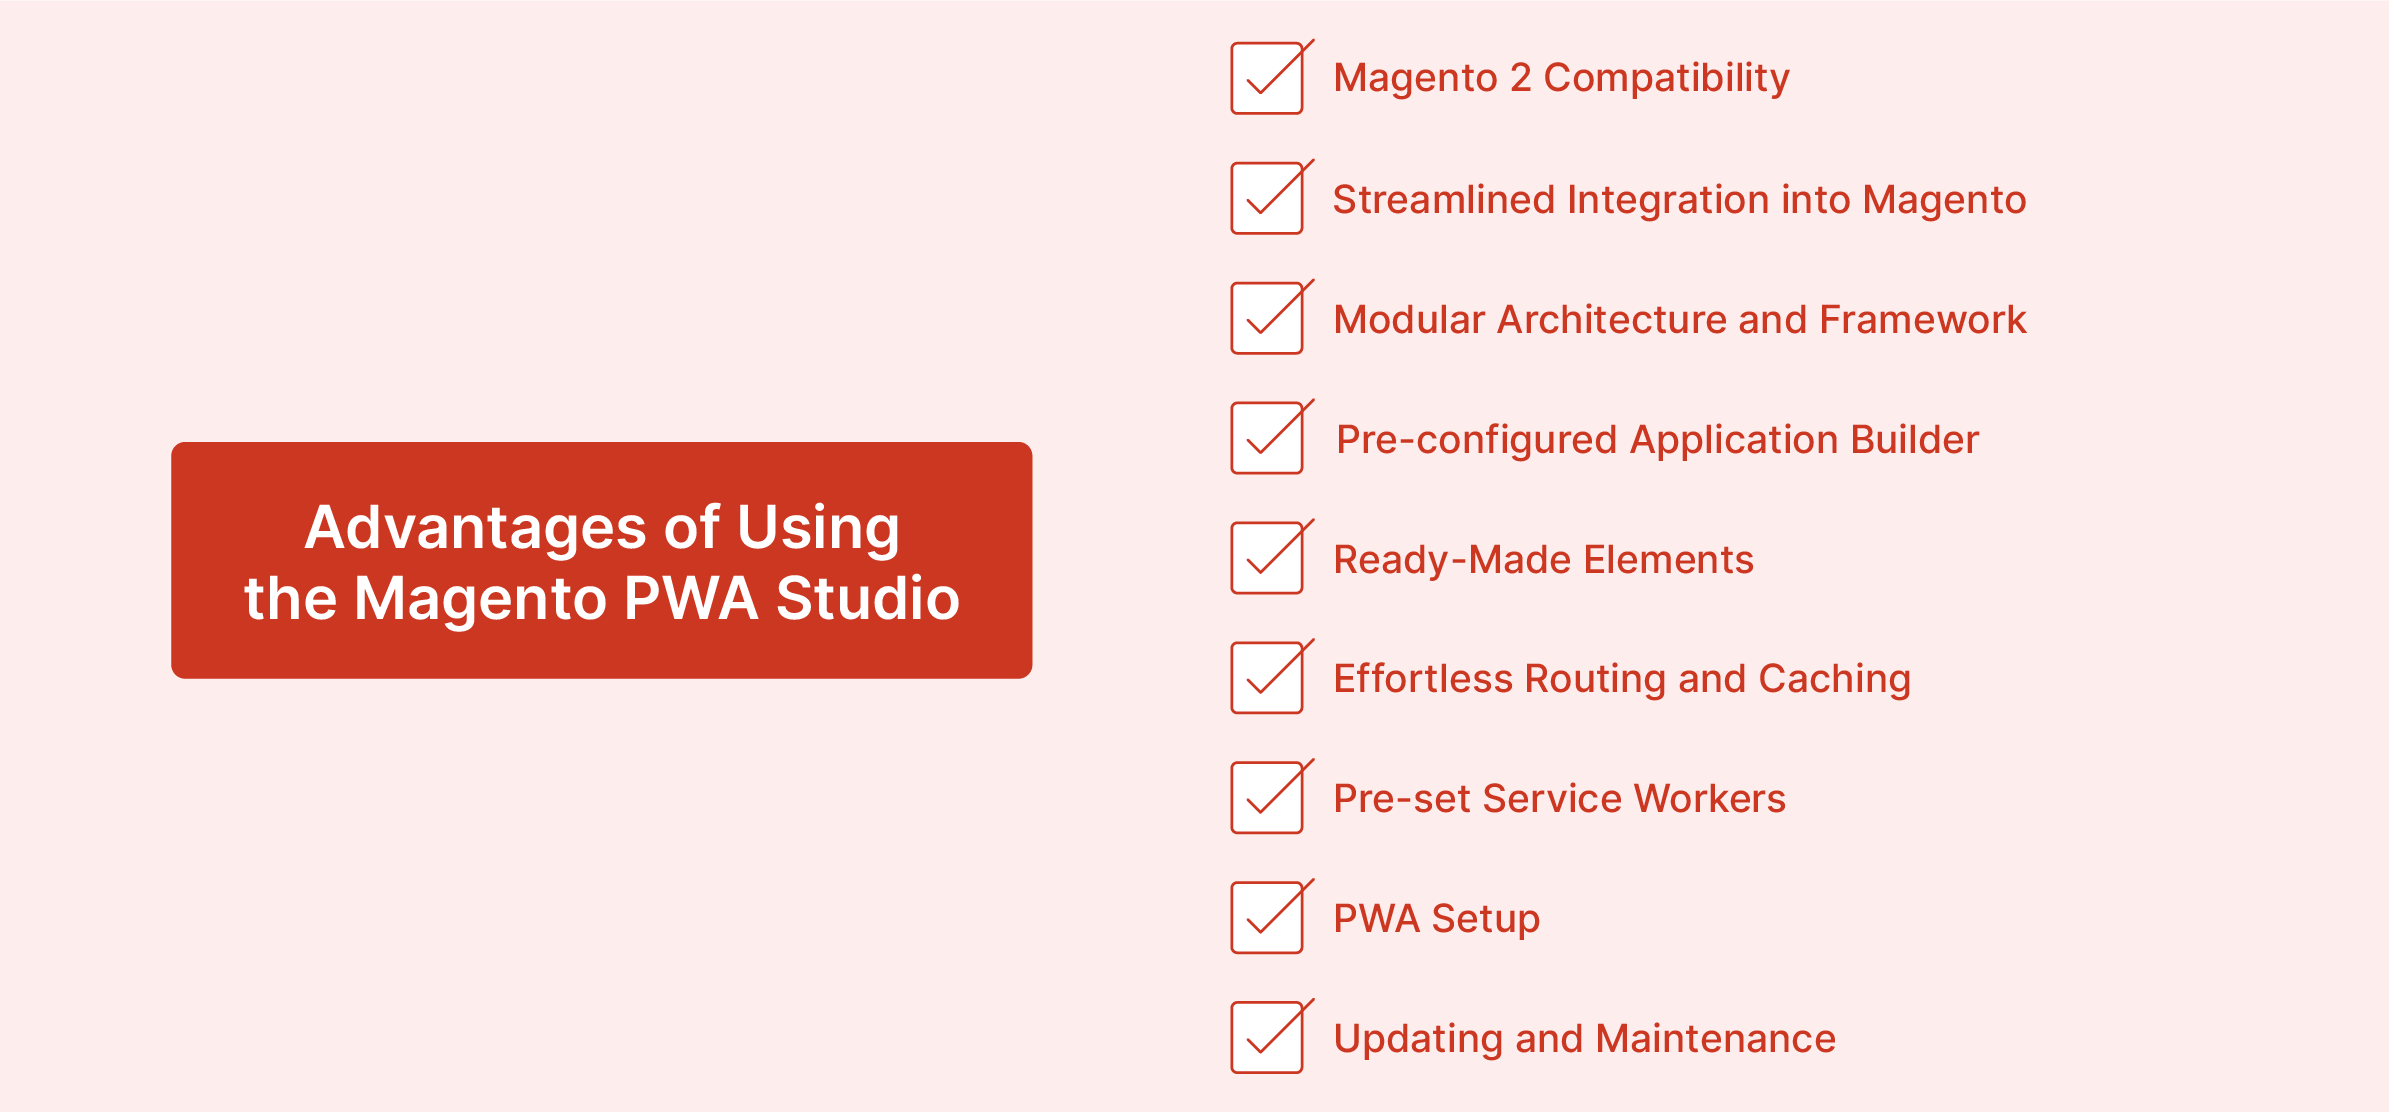 Key benefits of using Magento PWA Studio for seamless PWA development